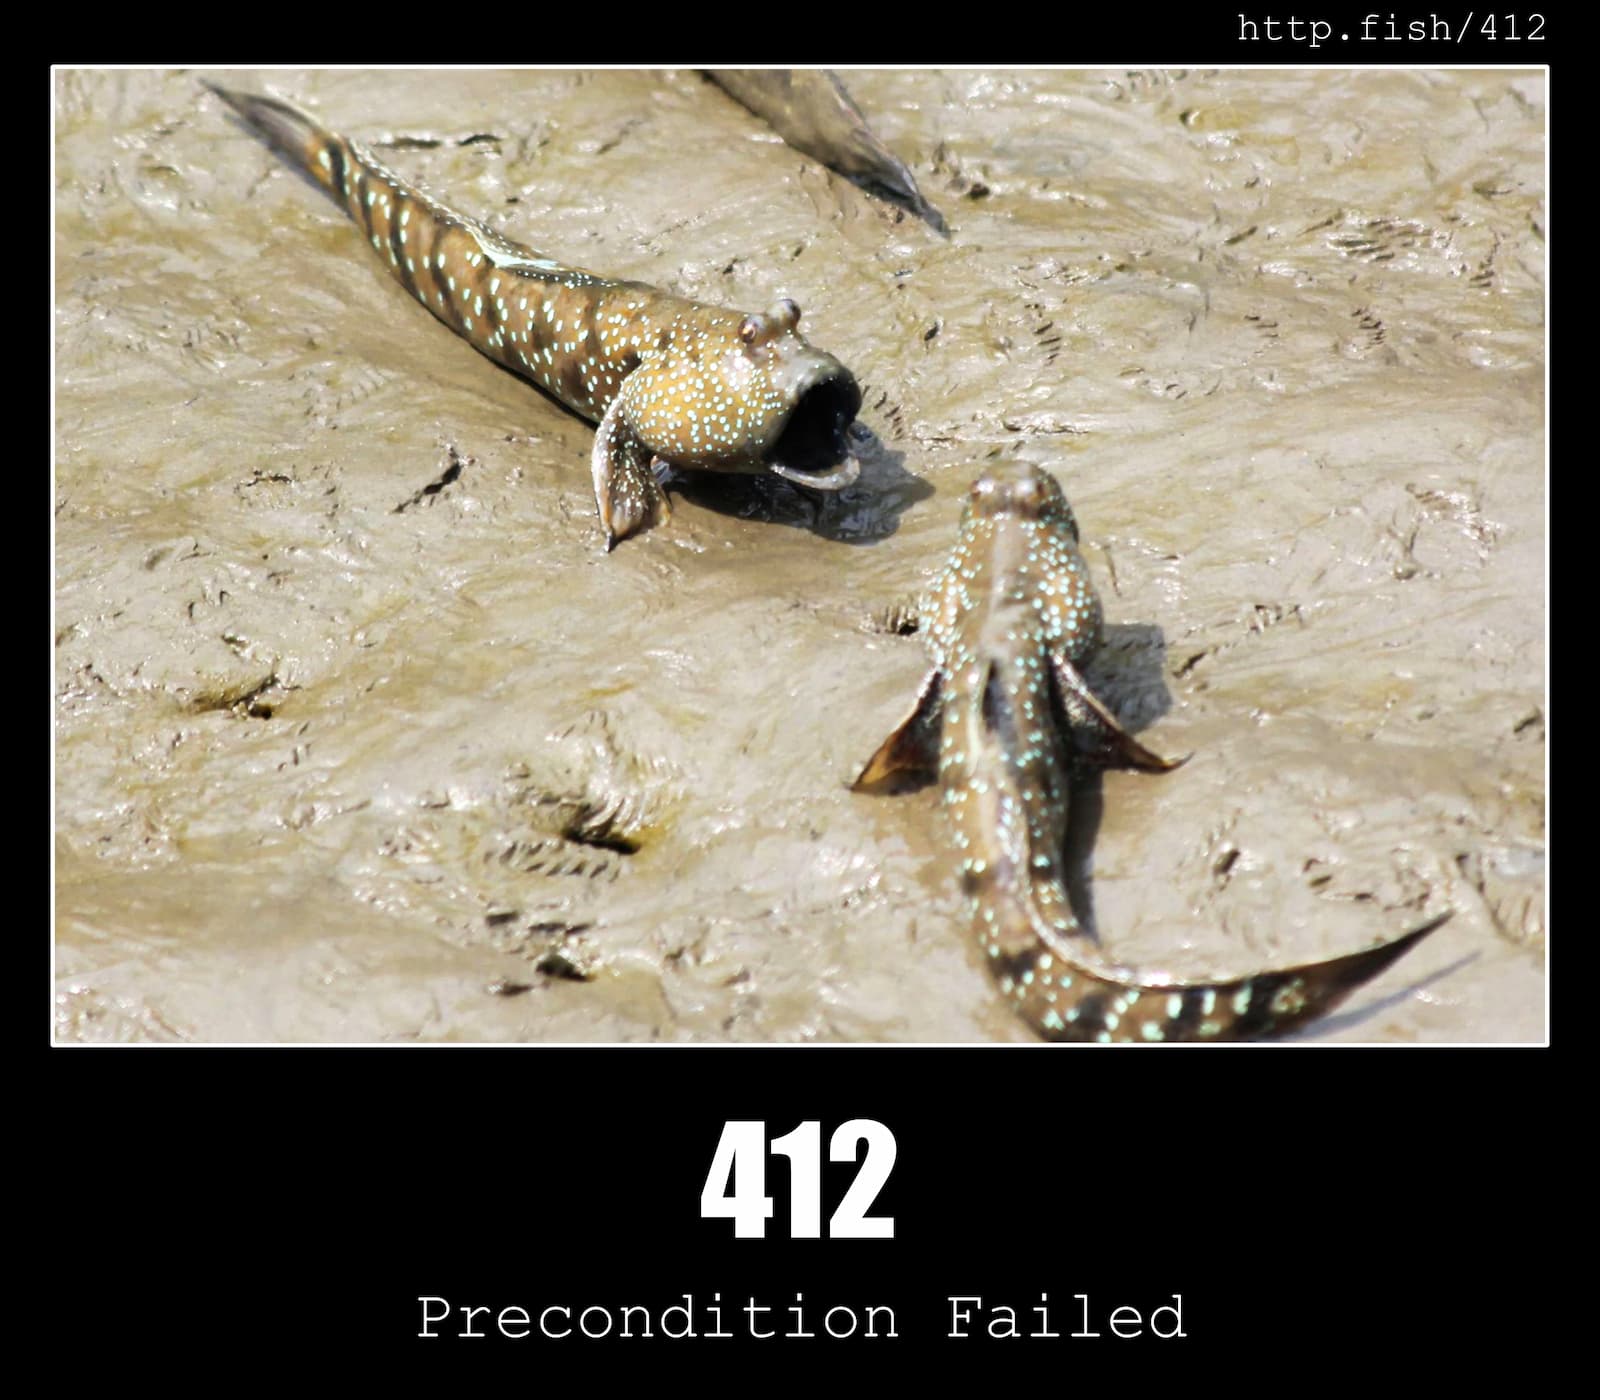 HTTP Status Code 412 Precondition Failed & Fish